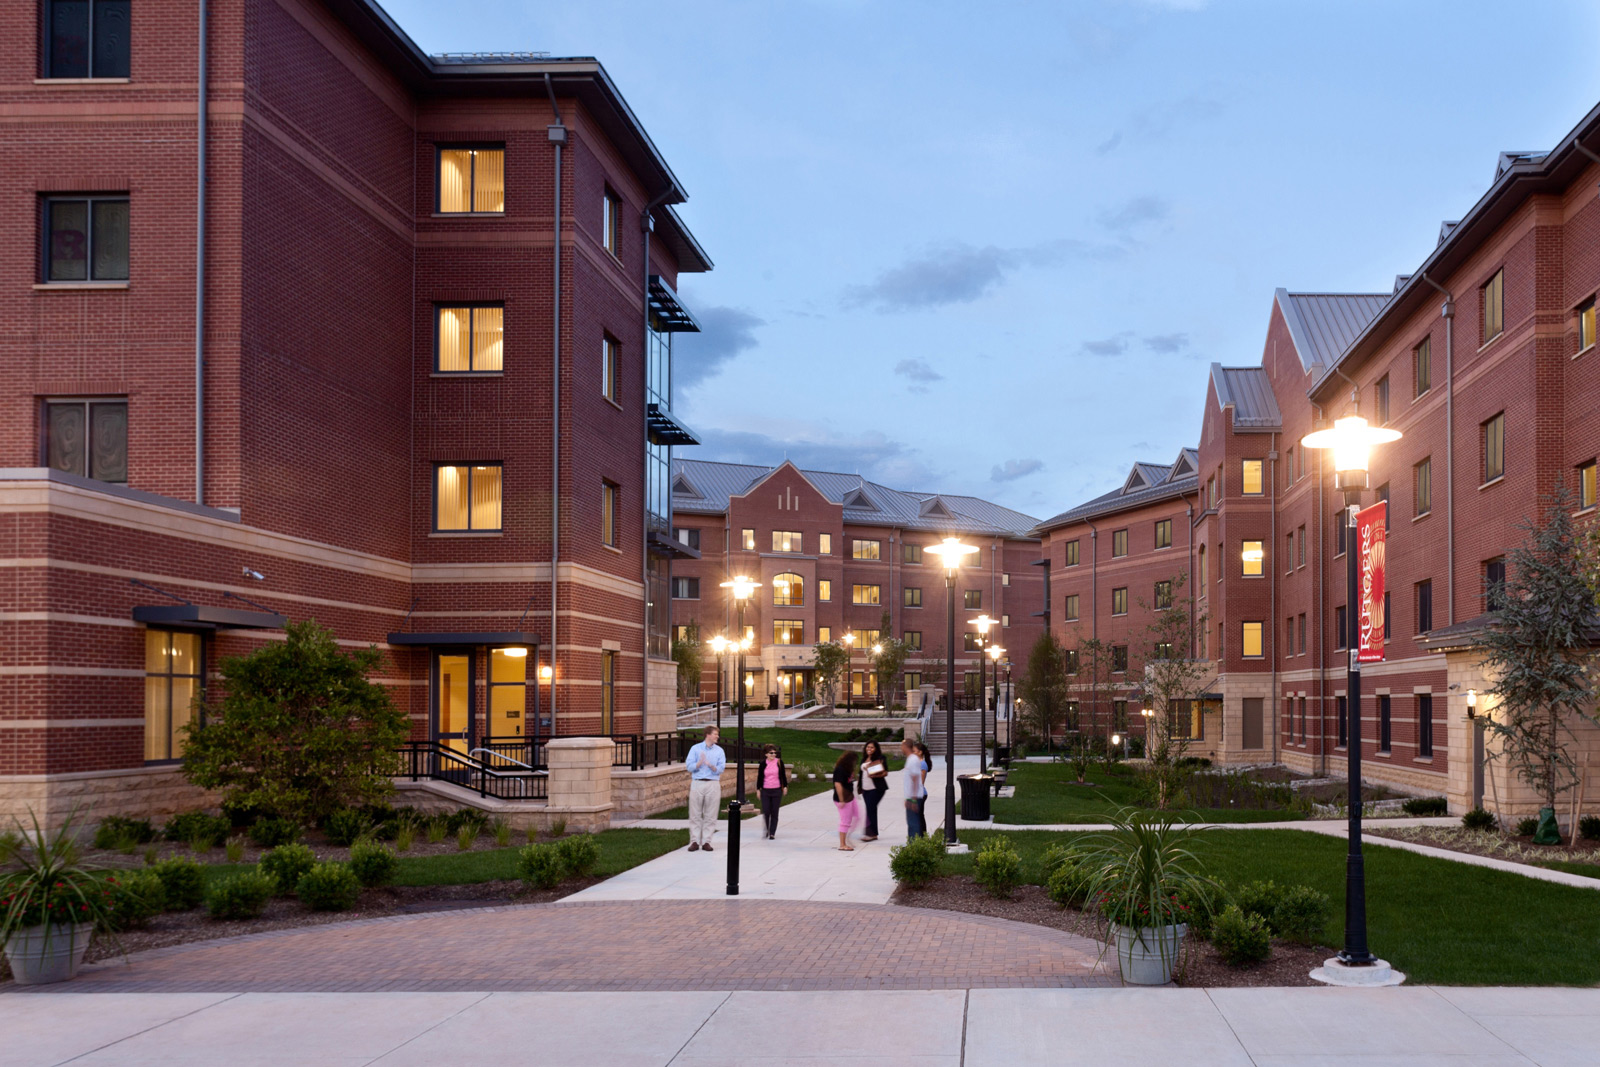 RutgersUniversity_BEST_CourtyardDusk.jpg